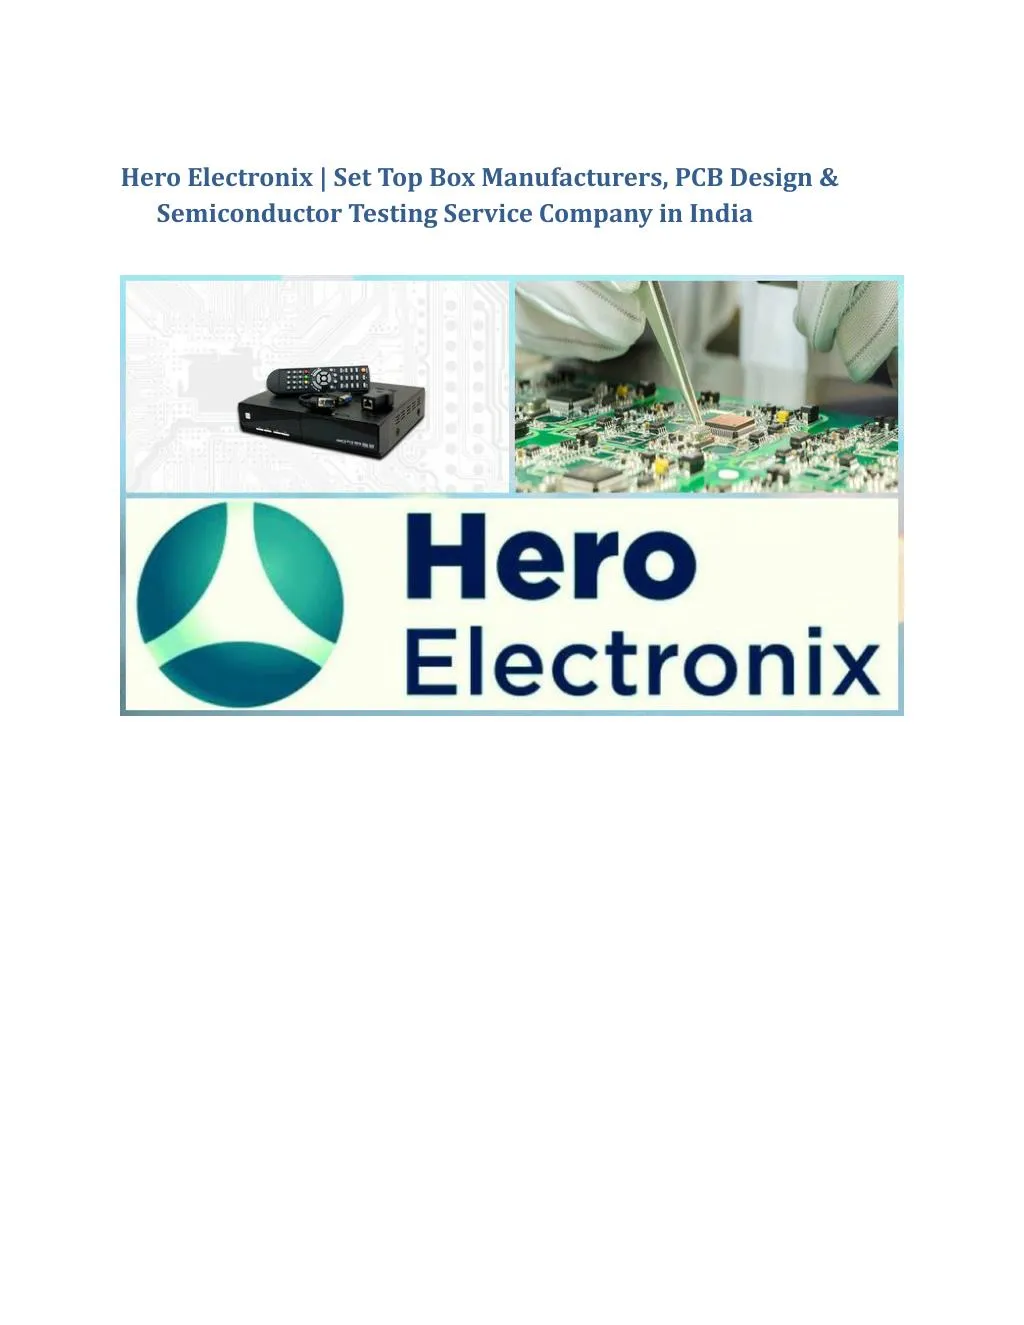 hero electronix set top box manufacturers